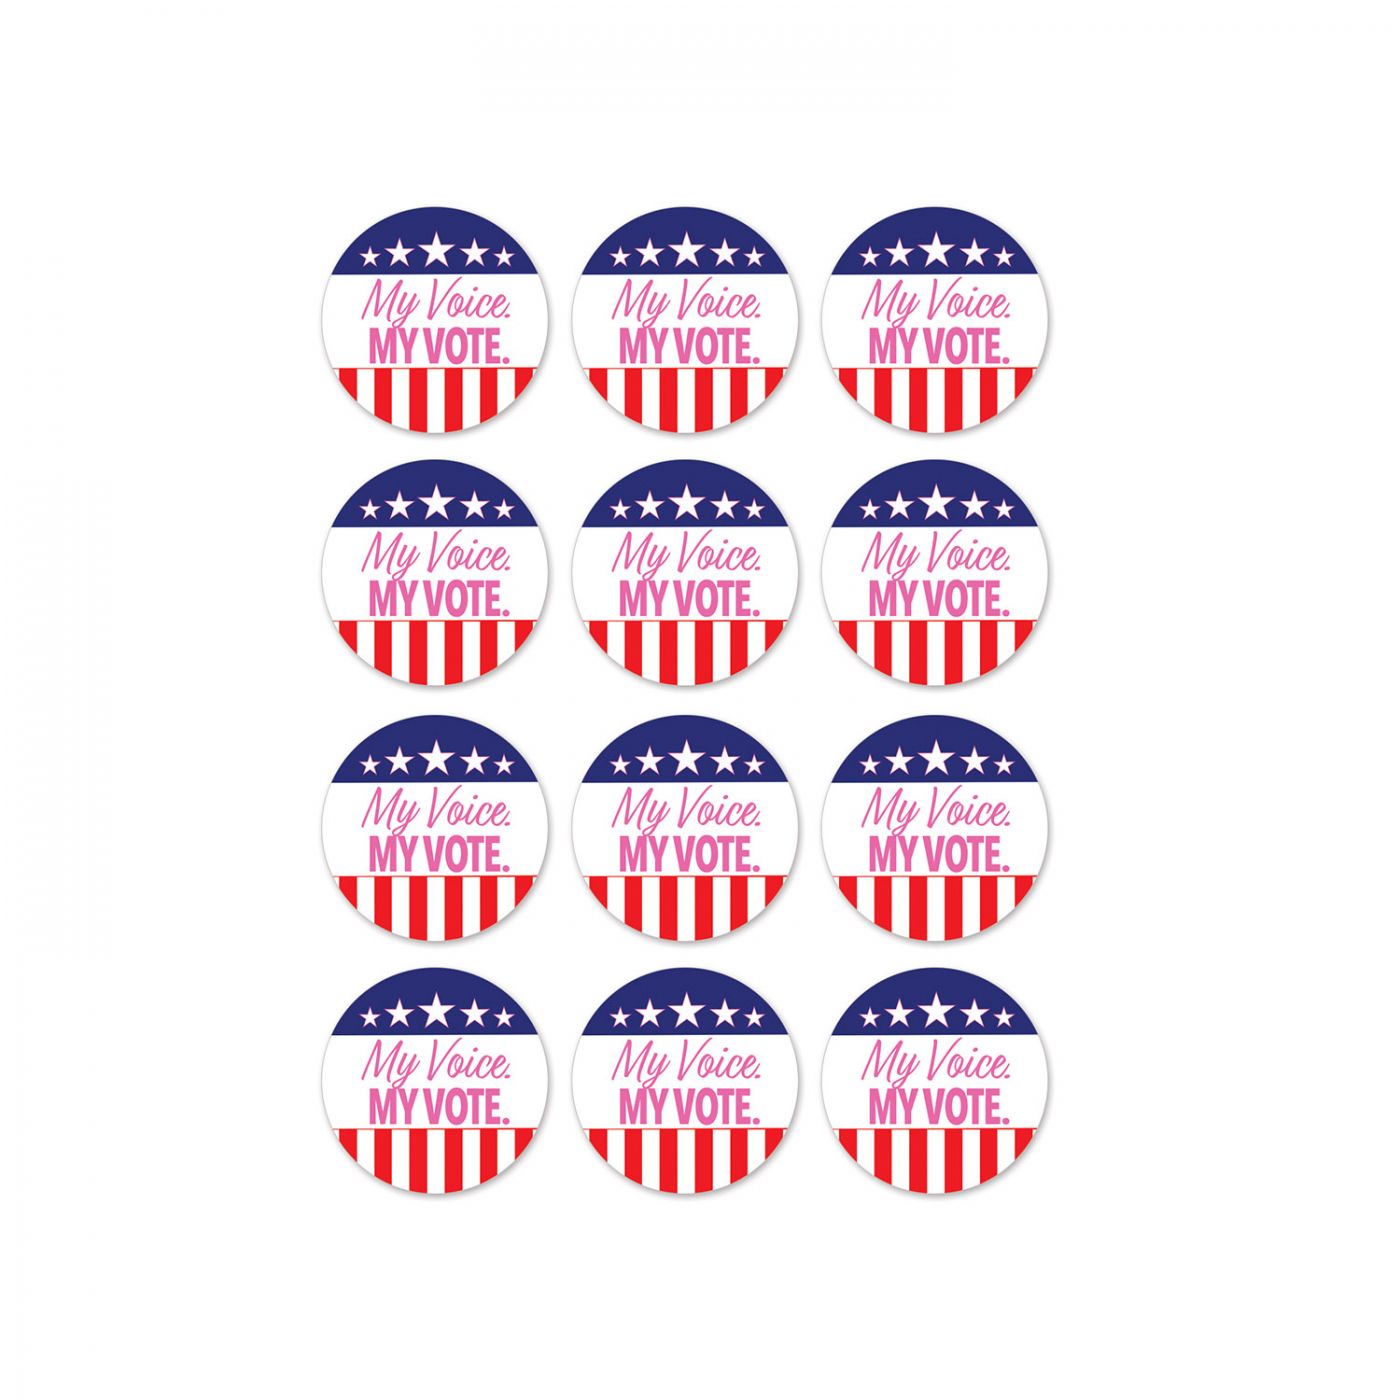 My Voice. My Vote. Stickers (12) image